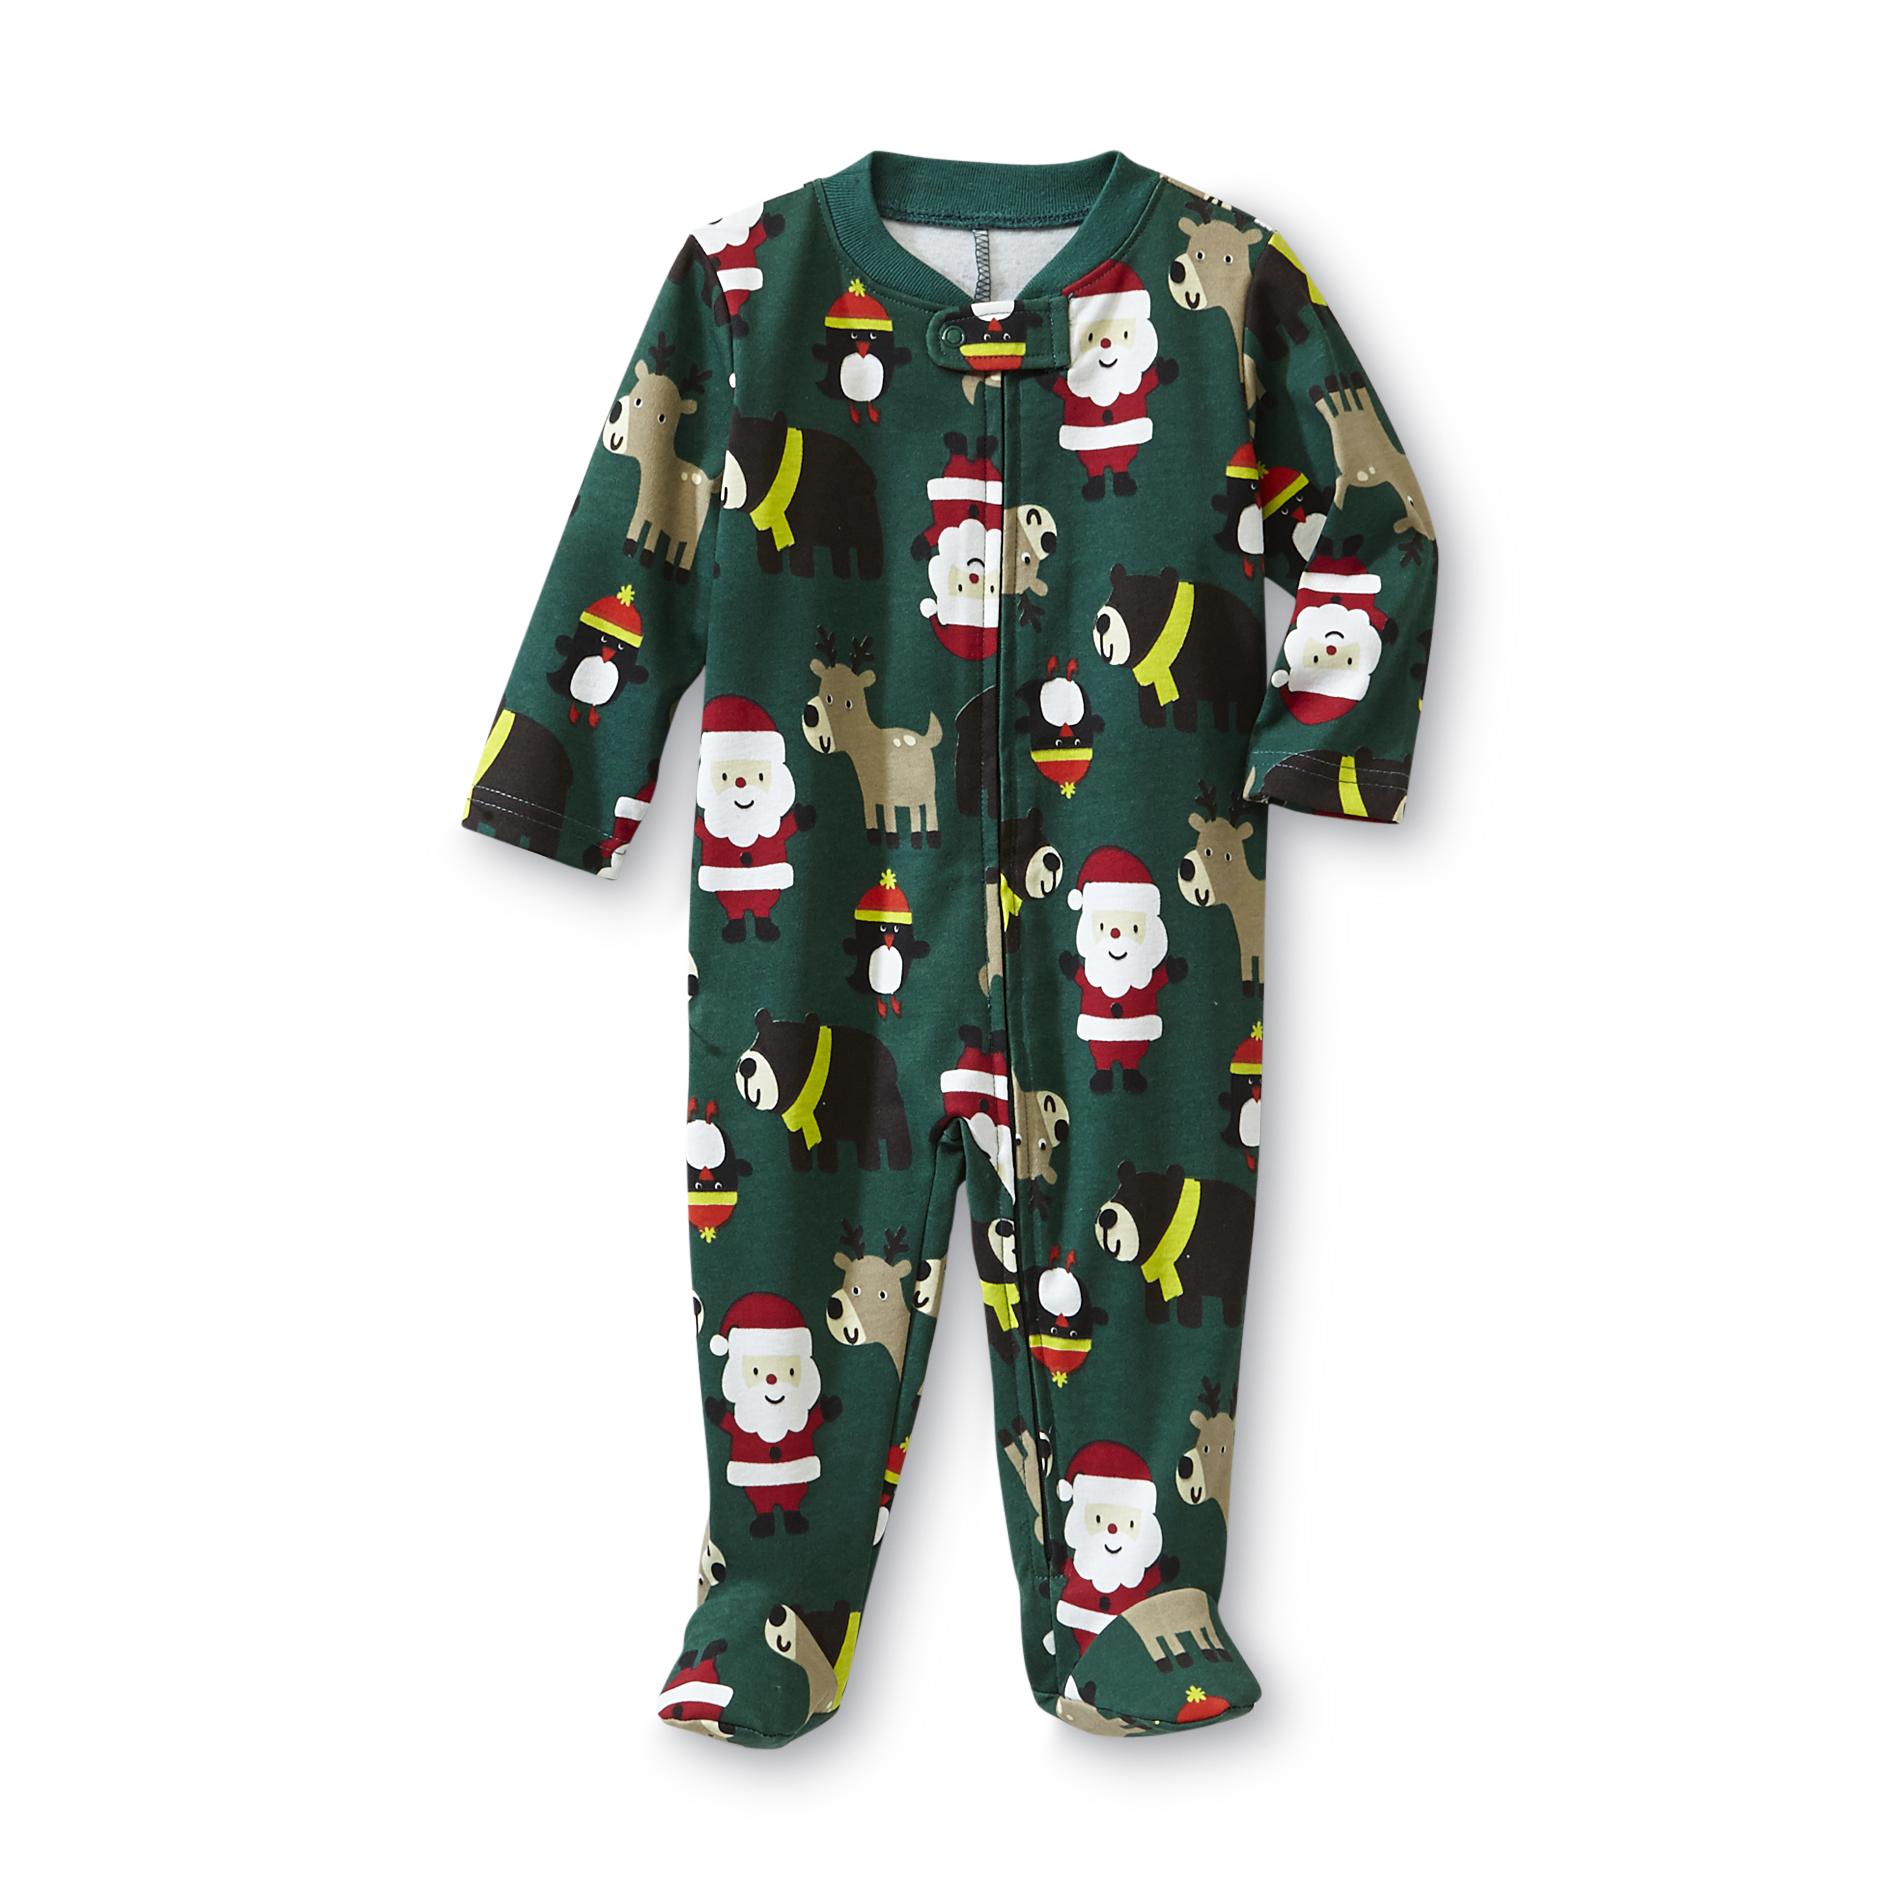 Little Wonders Newborn Boy's Footed Pajamas